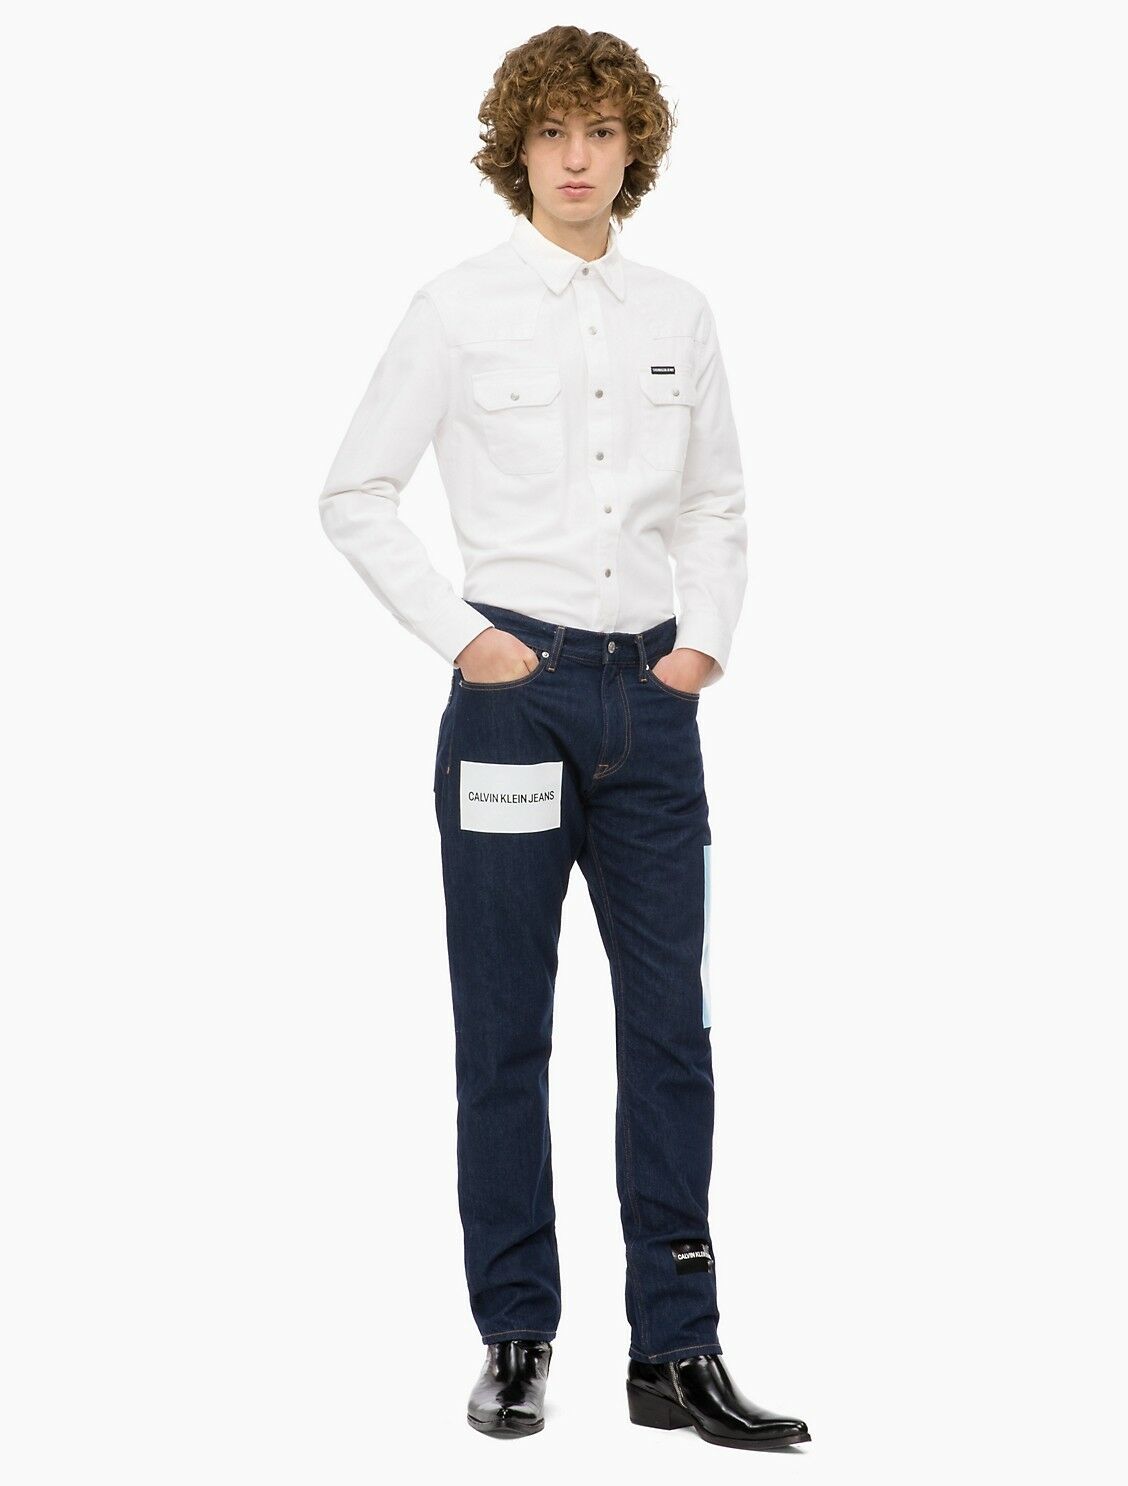 Calvin Klein CK American Classics CKJ 035 Men's Straight Jeans (Size 36x32) - Rekes Sales